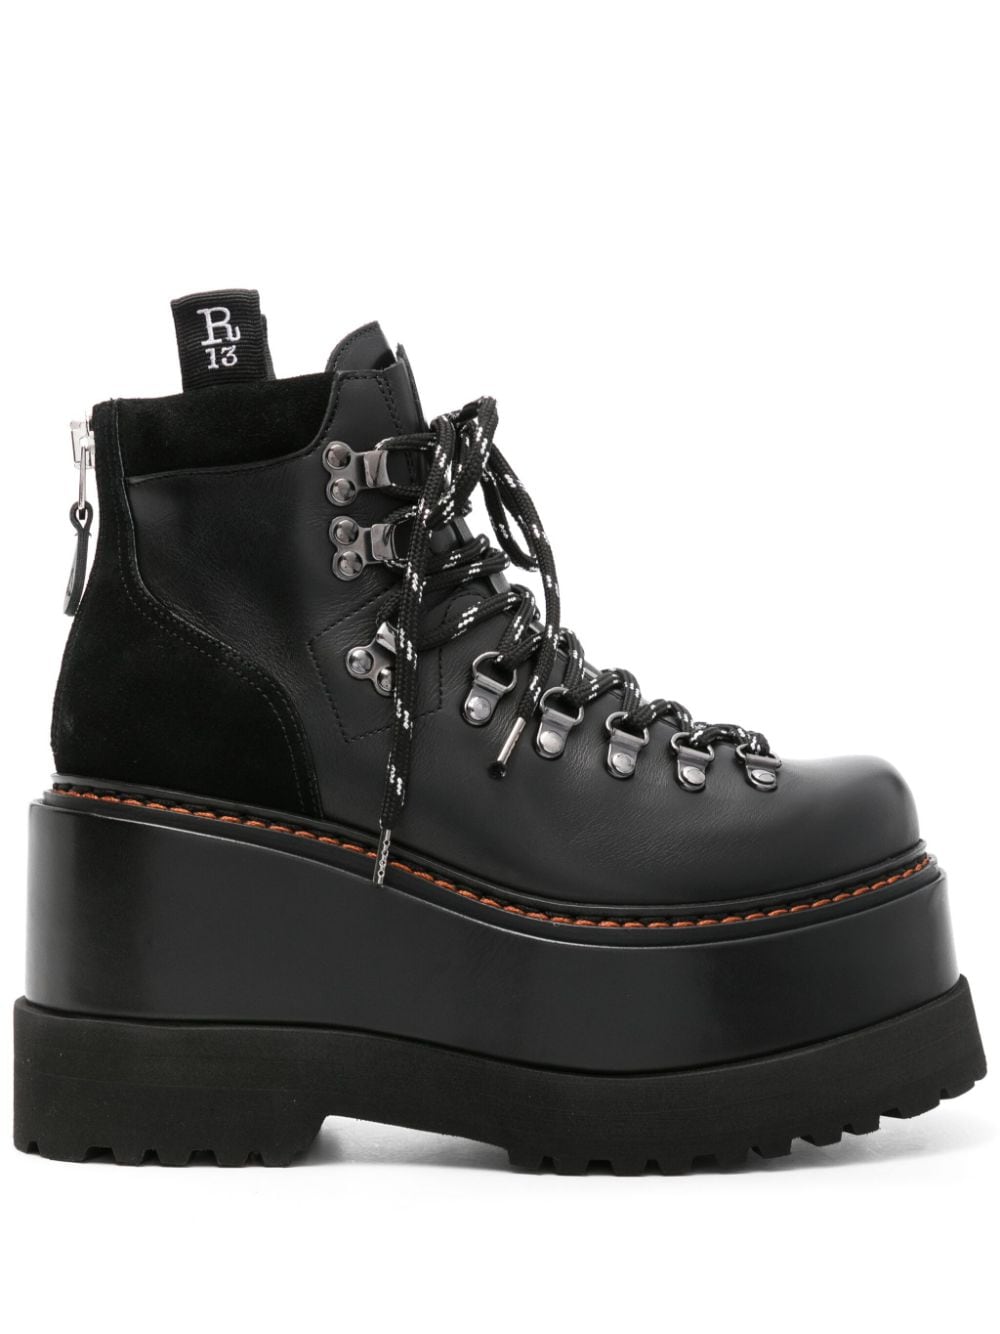 R13 Trailblazer leather platform boots Black